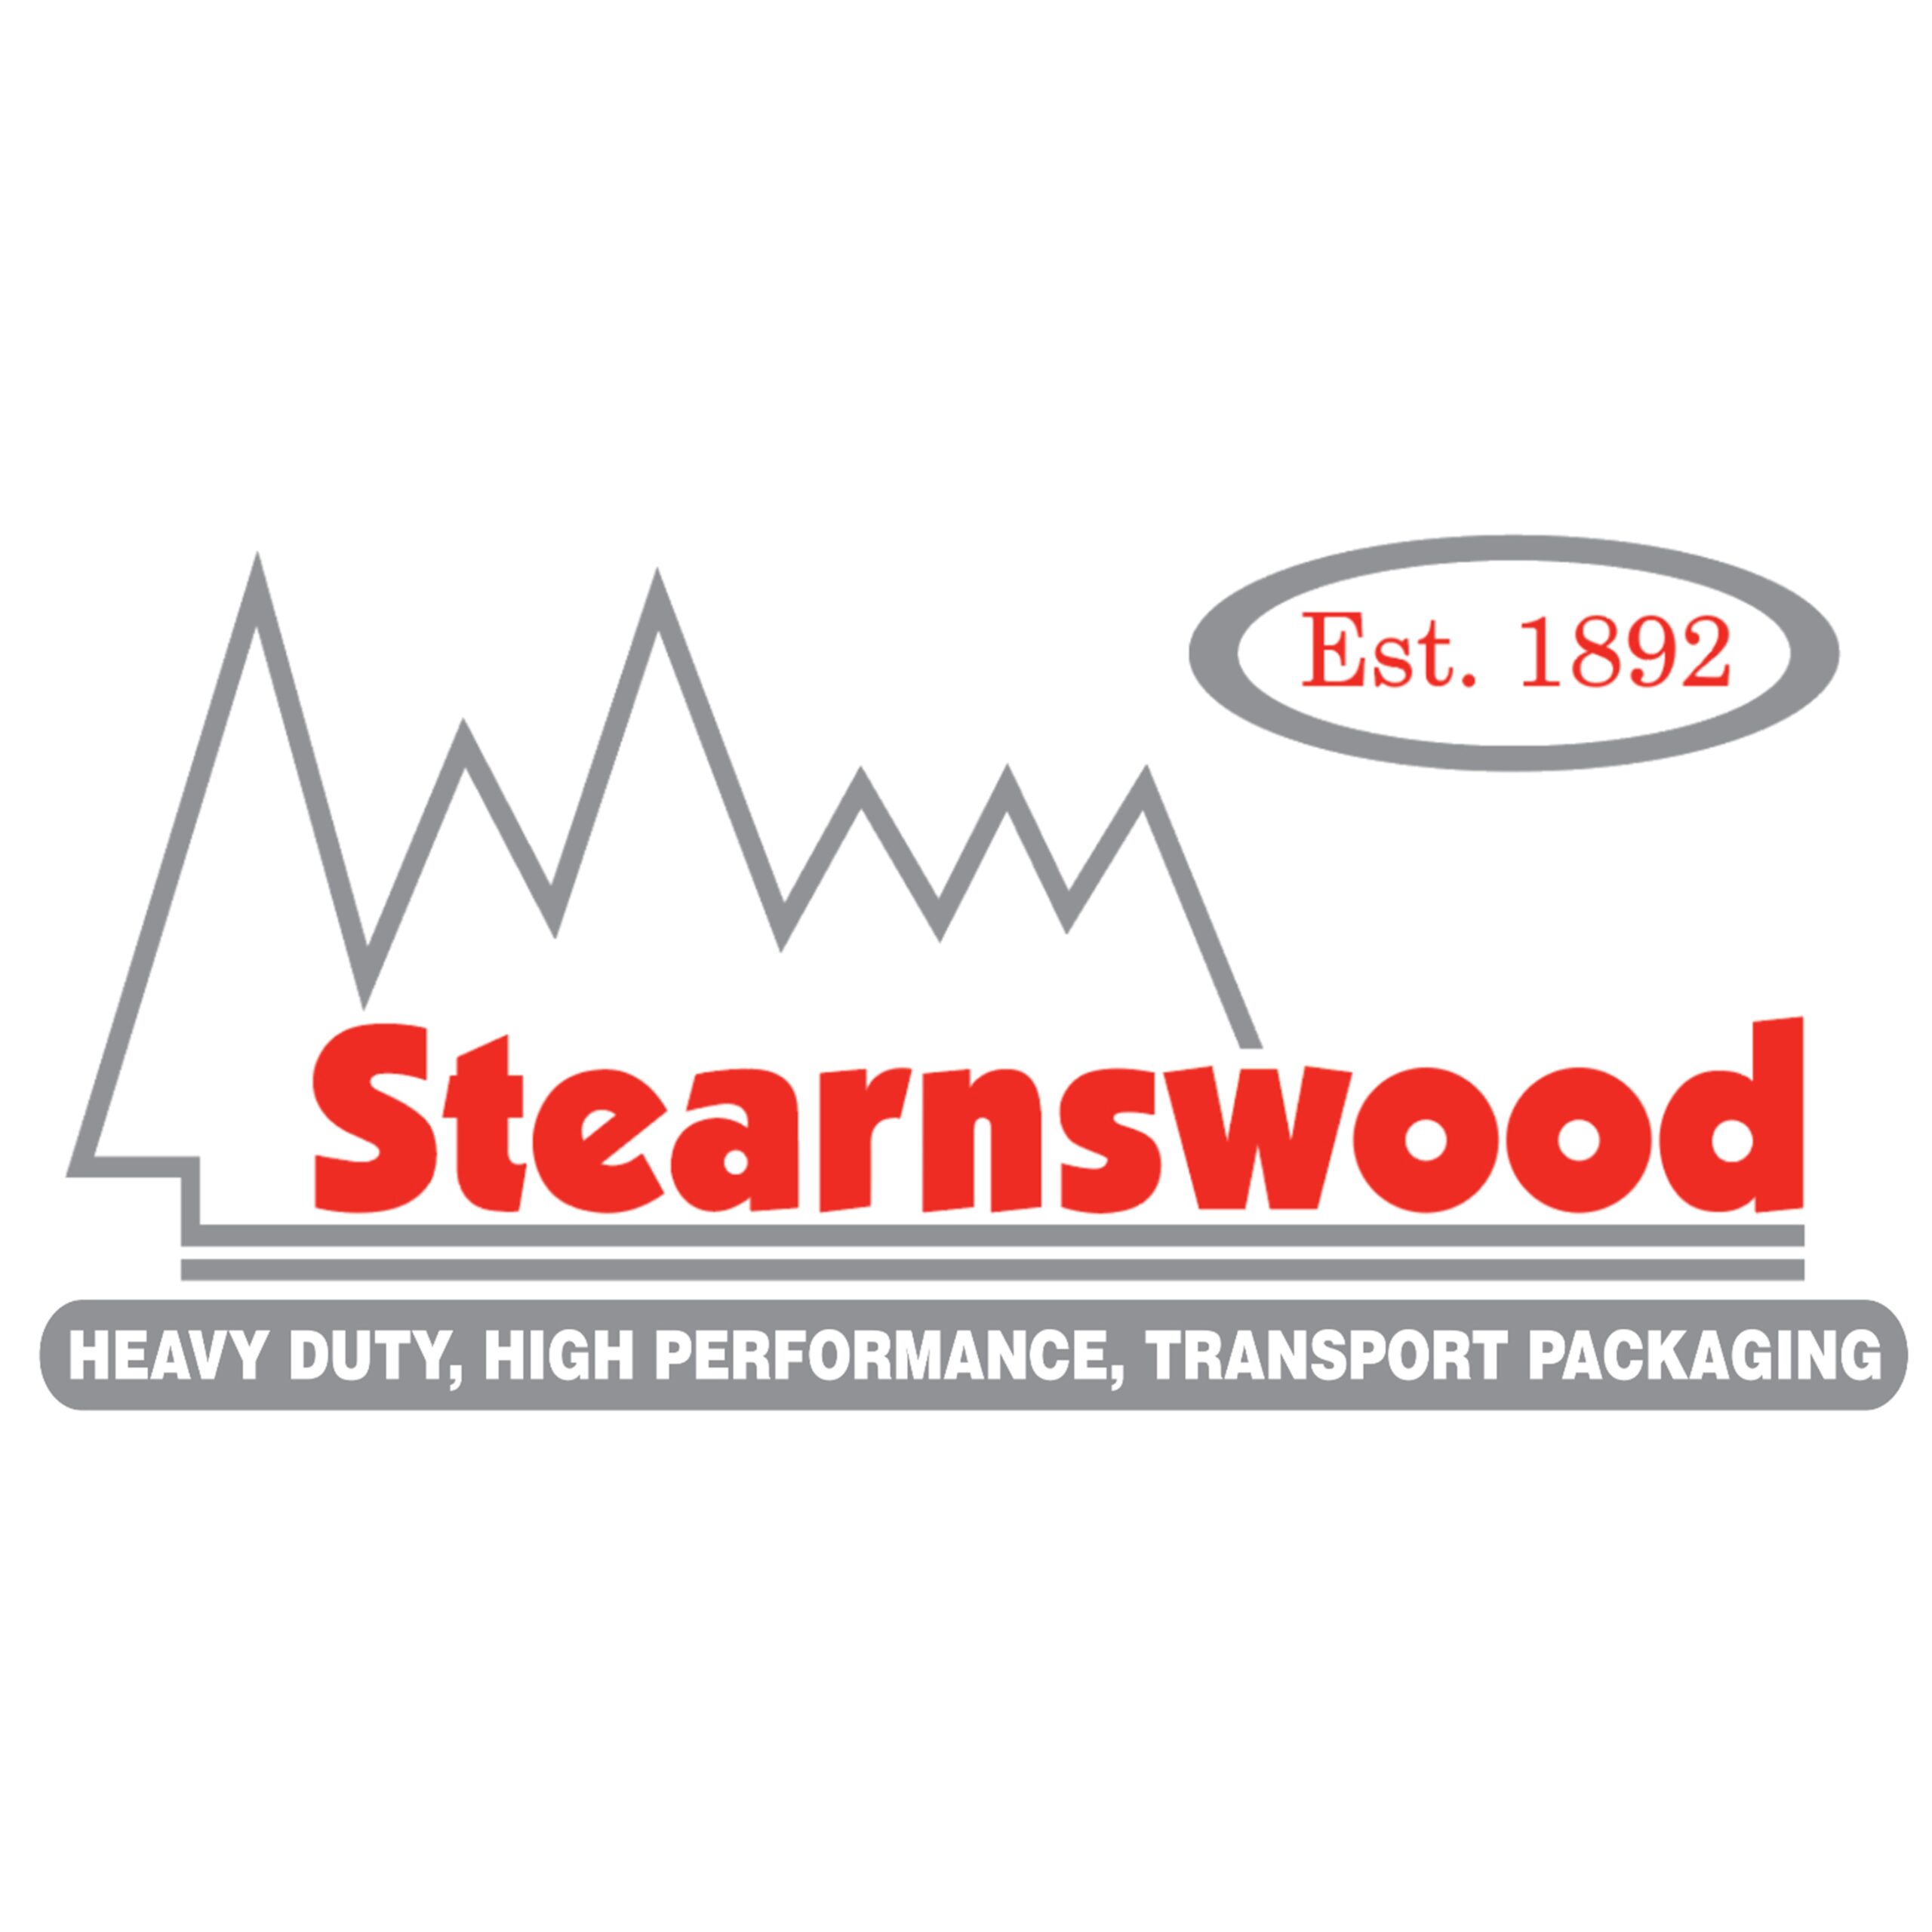 Stearnswood